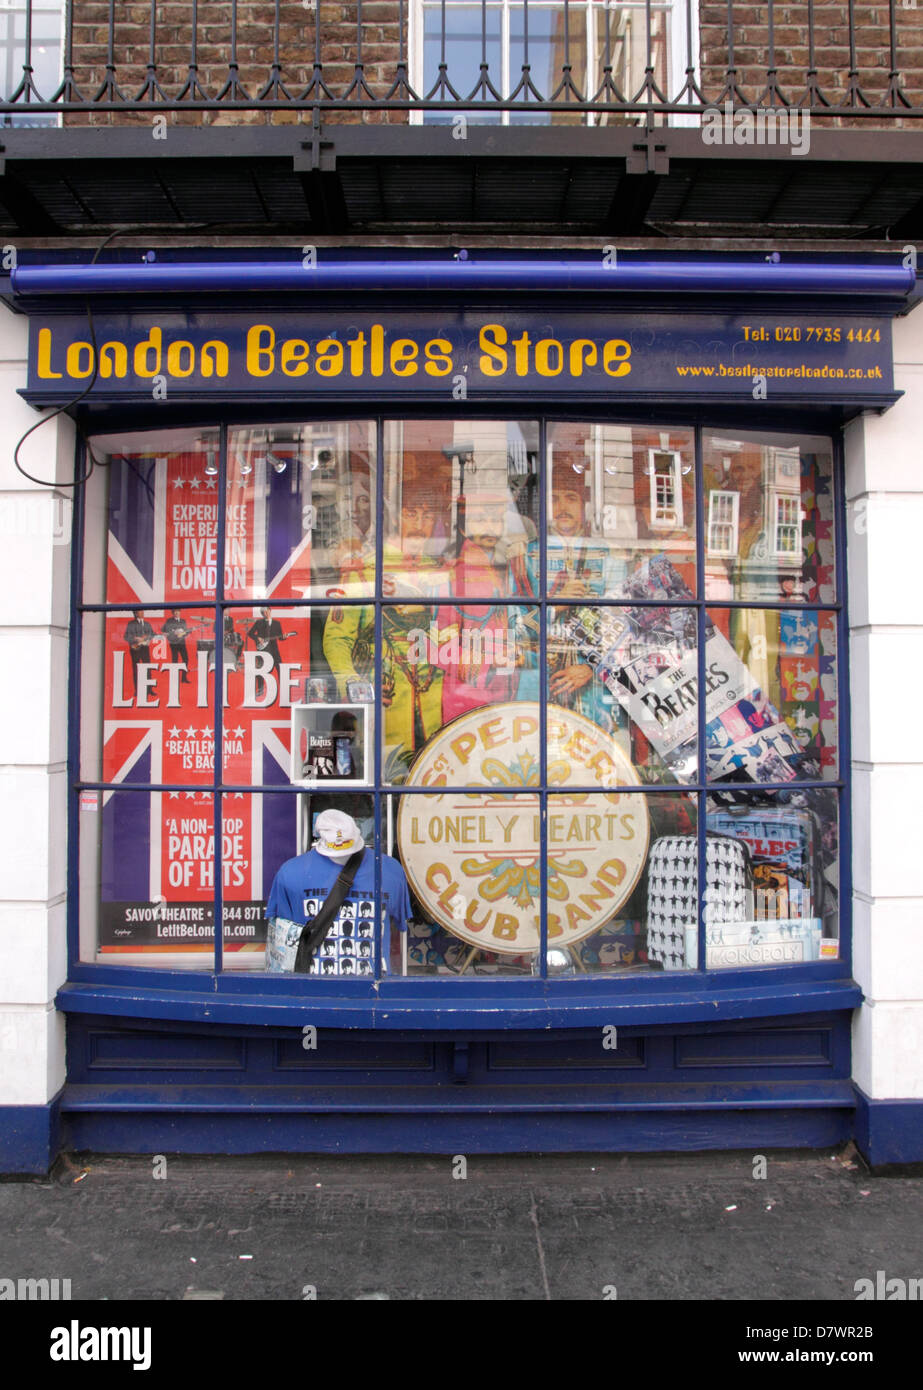 London Beatles Store Baker Street Stock Photo